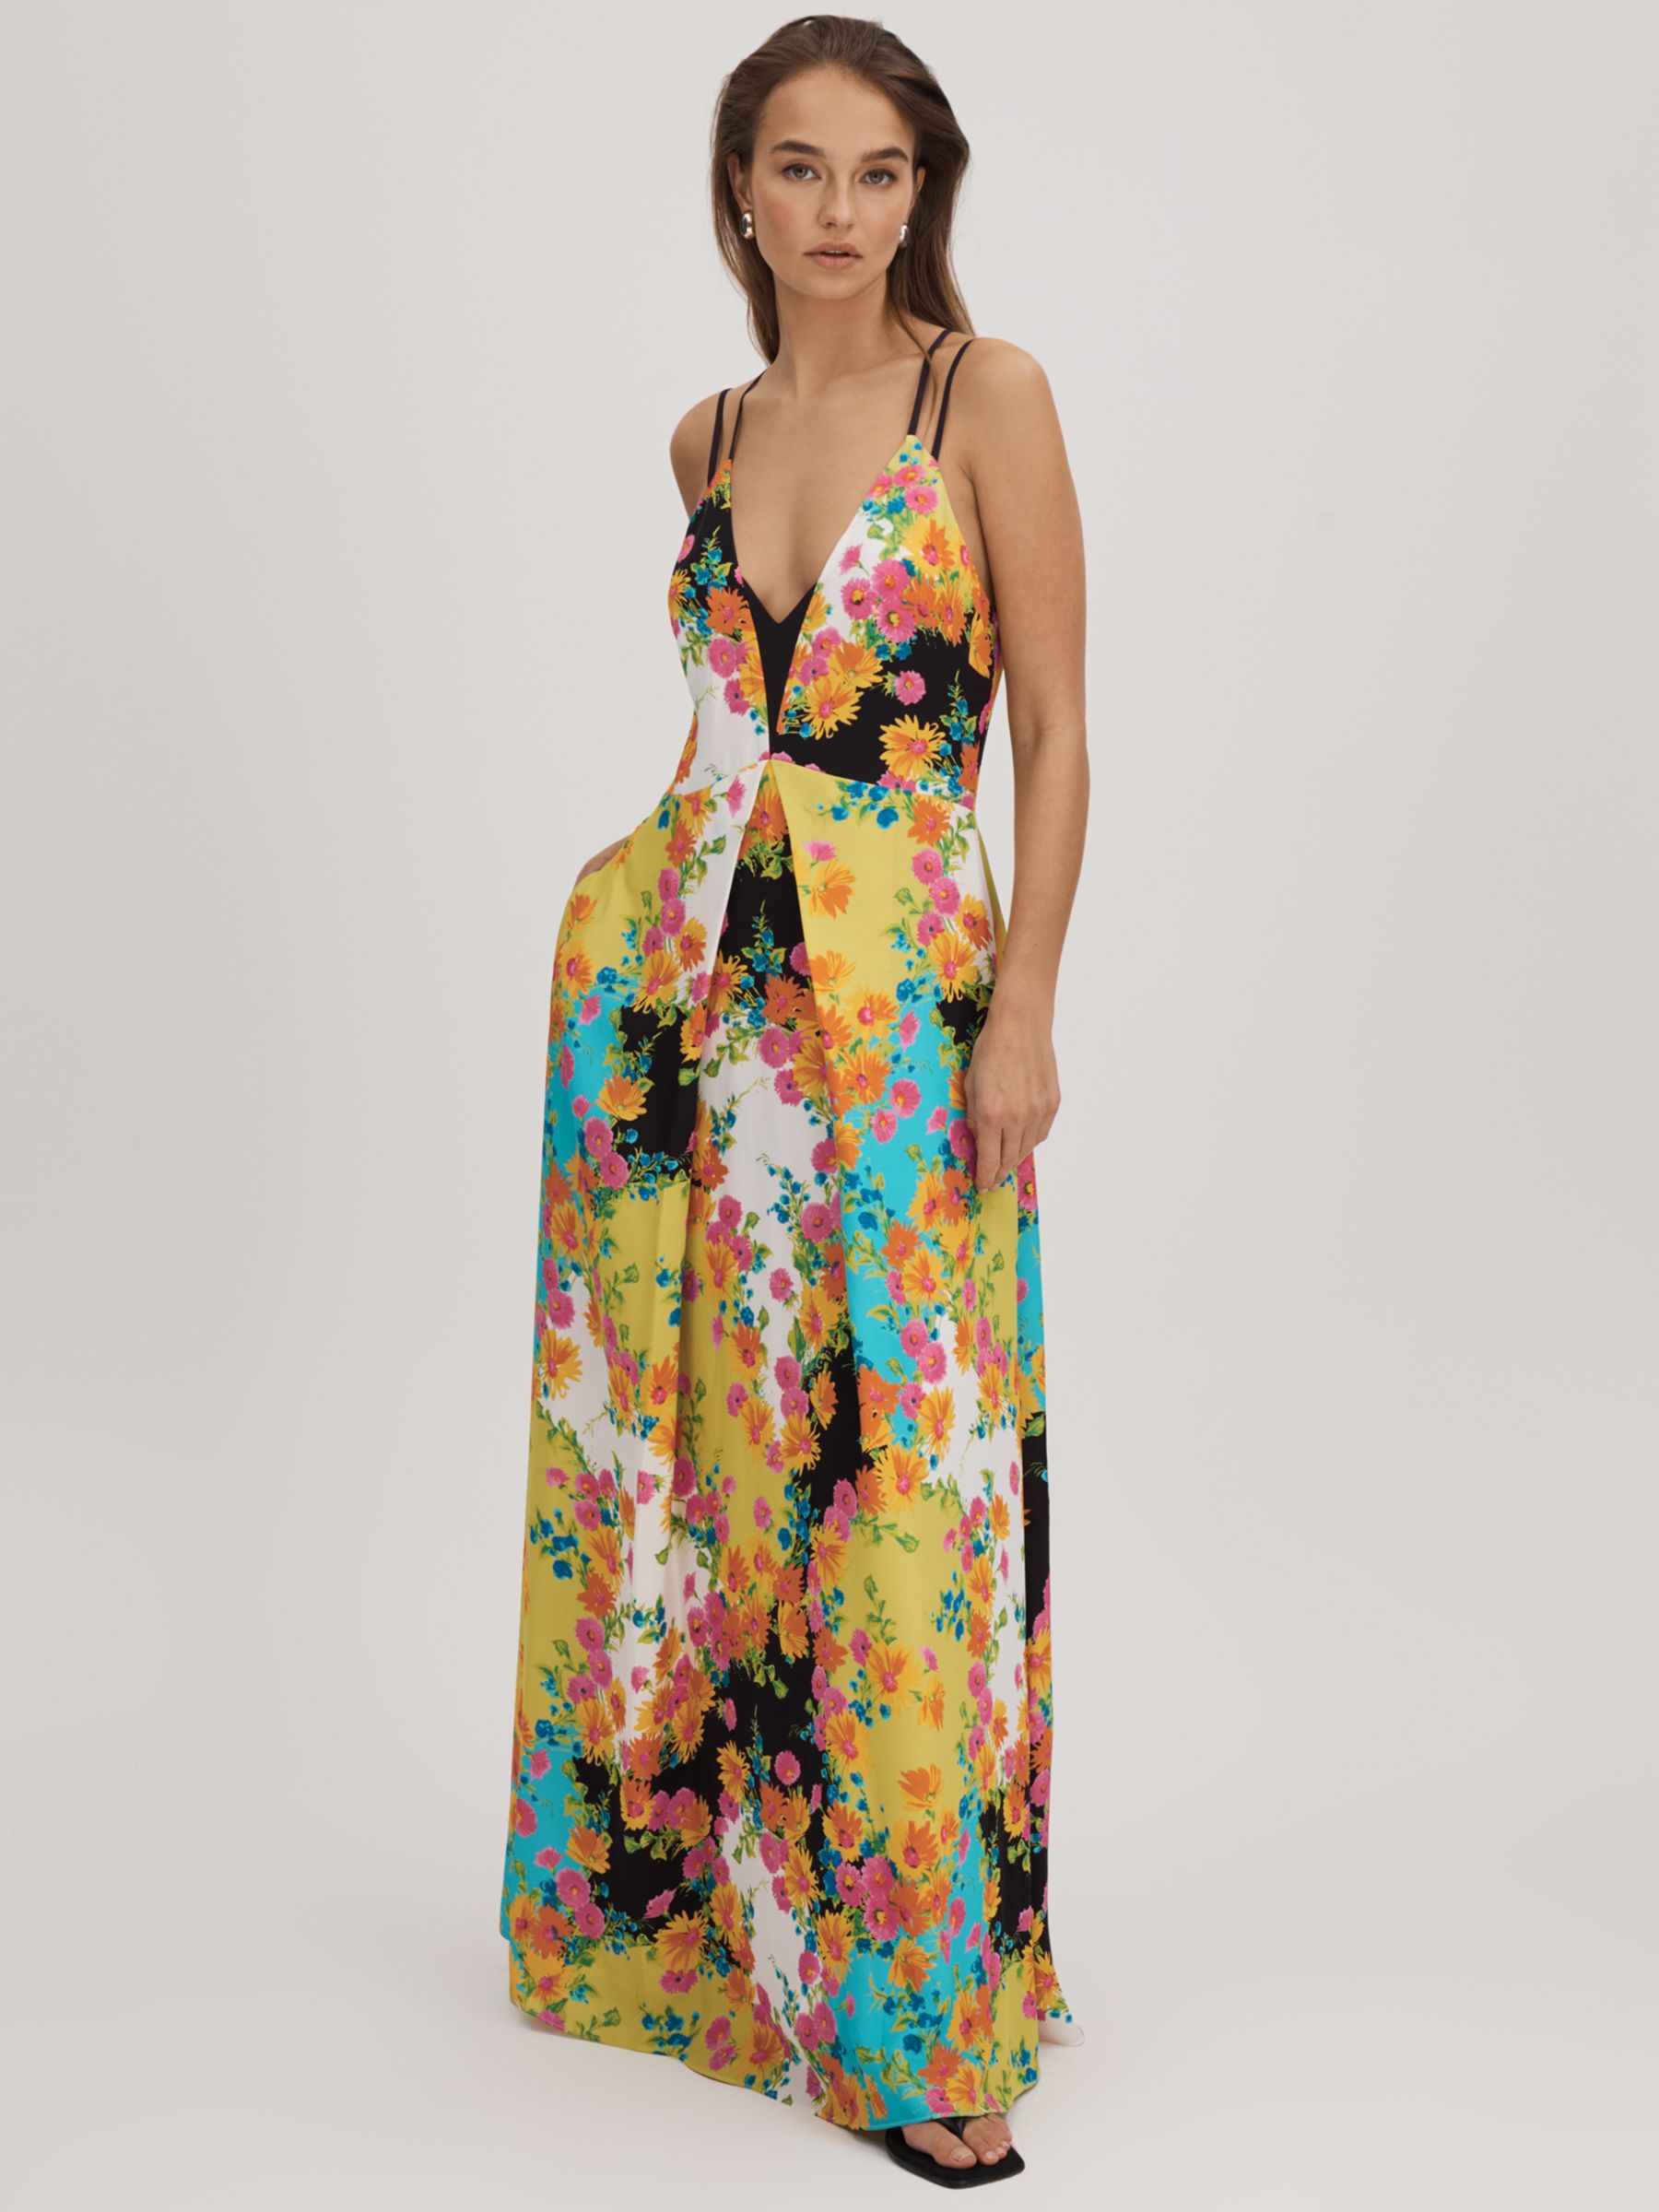 FLORERE Floral V-neck Maxi Dress, Multi, 8